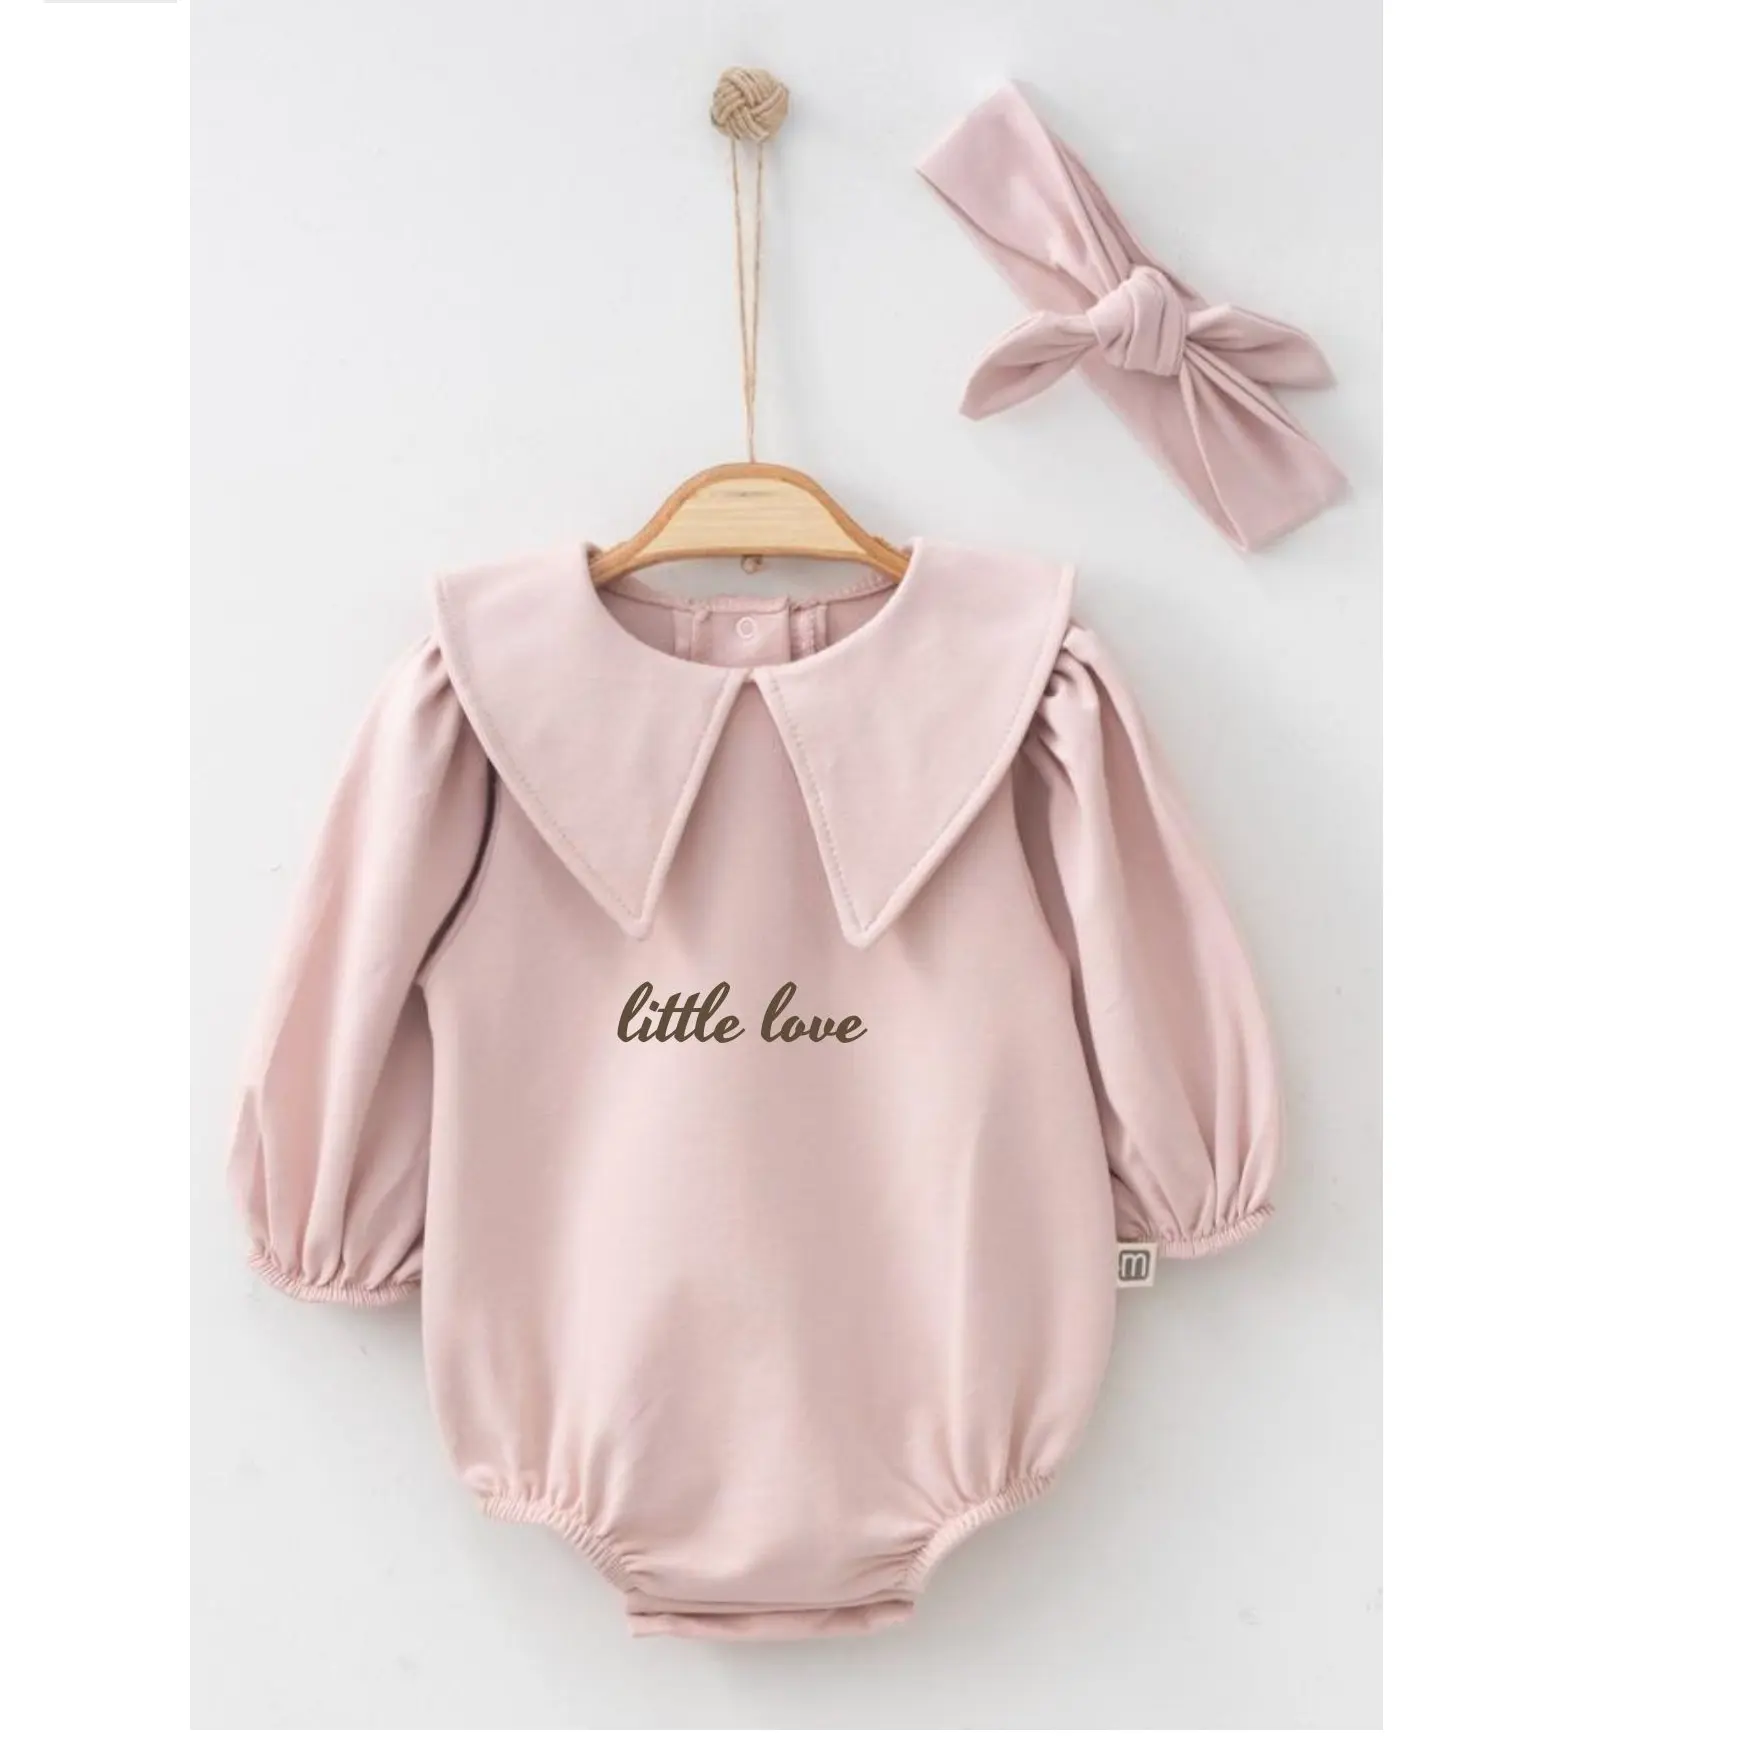 Hot Sale Baby Clothes New Born Baby Romper Outfit OEM Atacado de Alta Qualidade % 100 Algodão Sazonal Baby Clothes Kid's Clothes